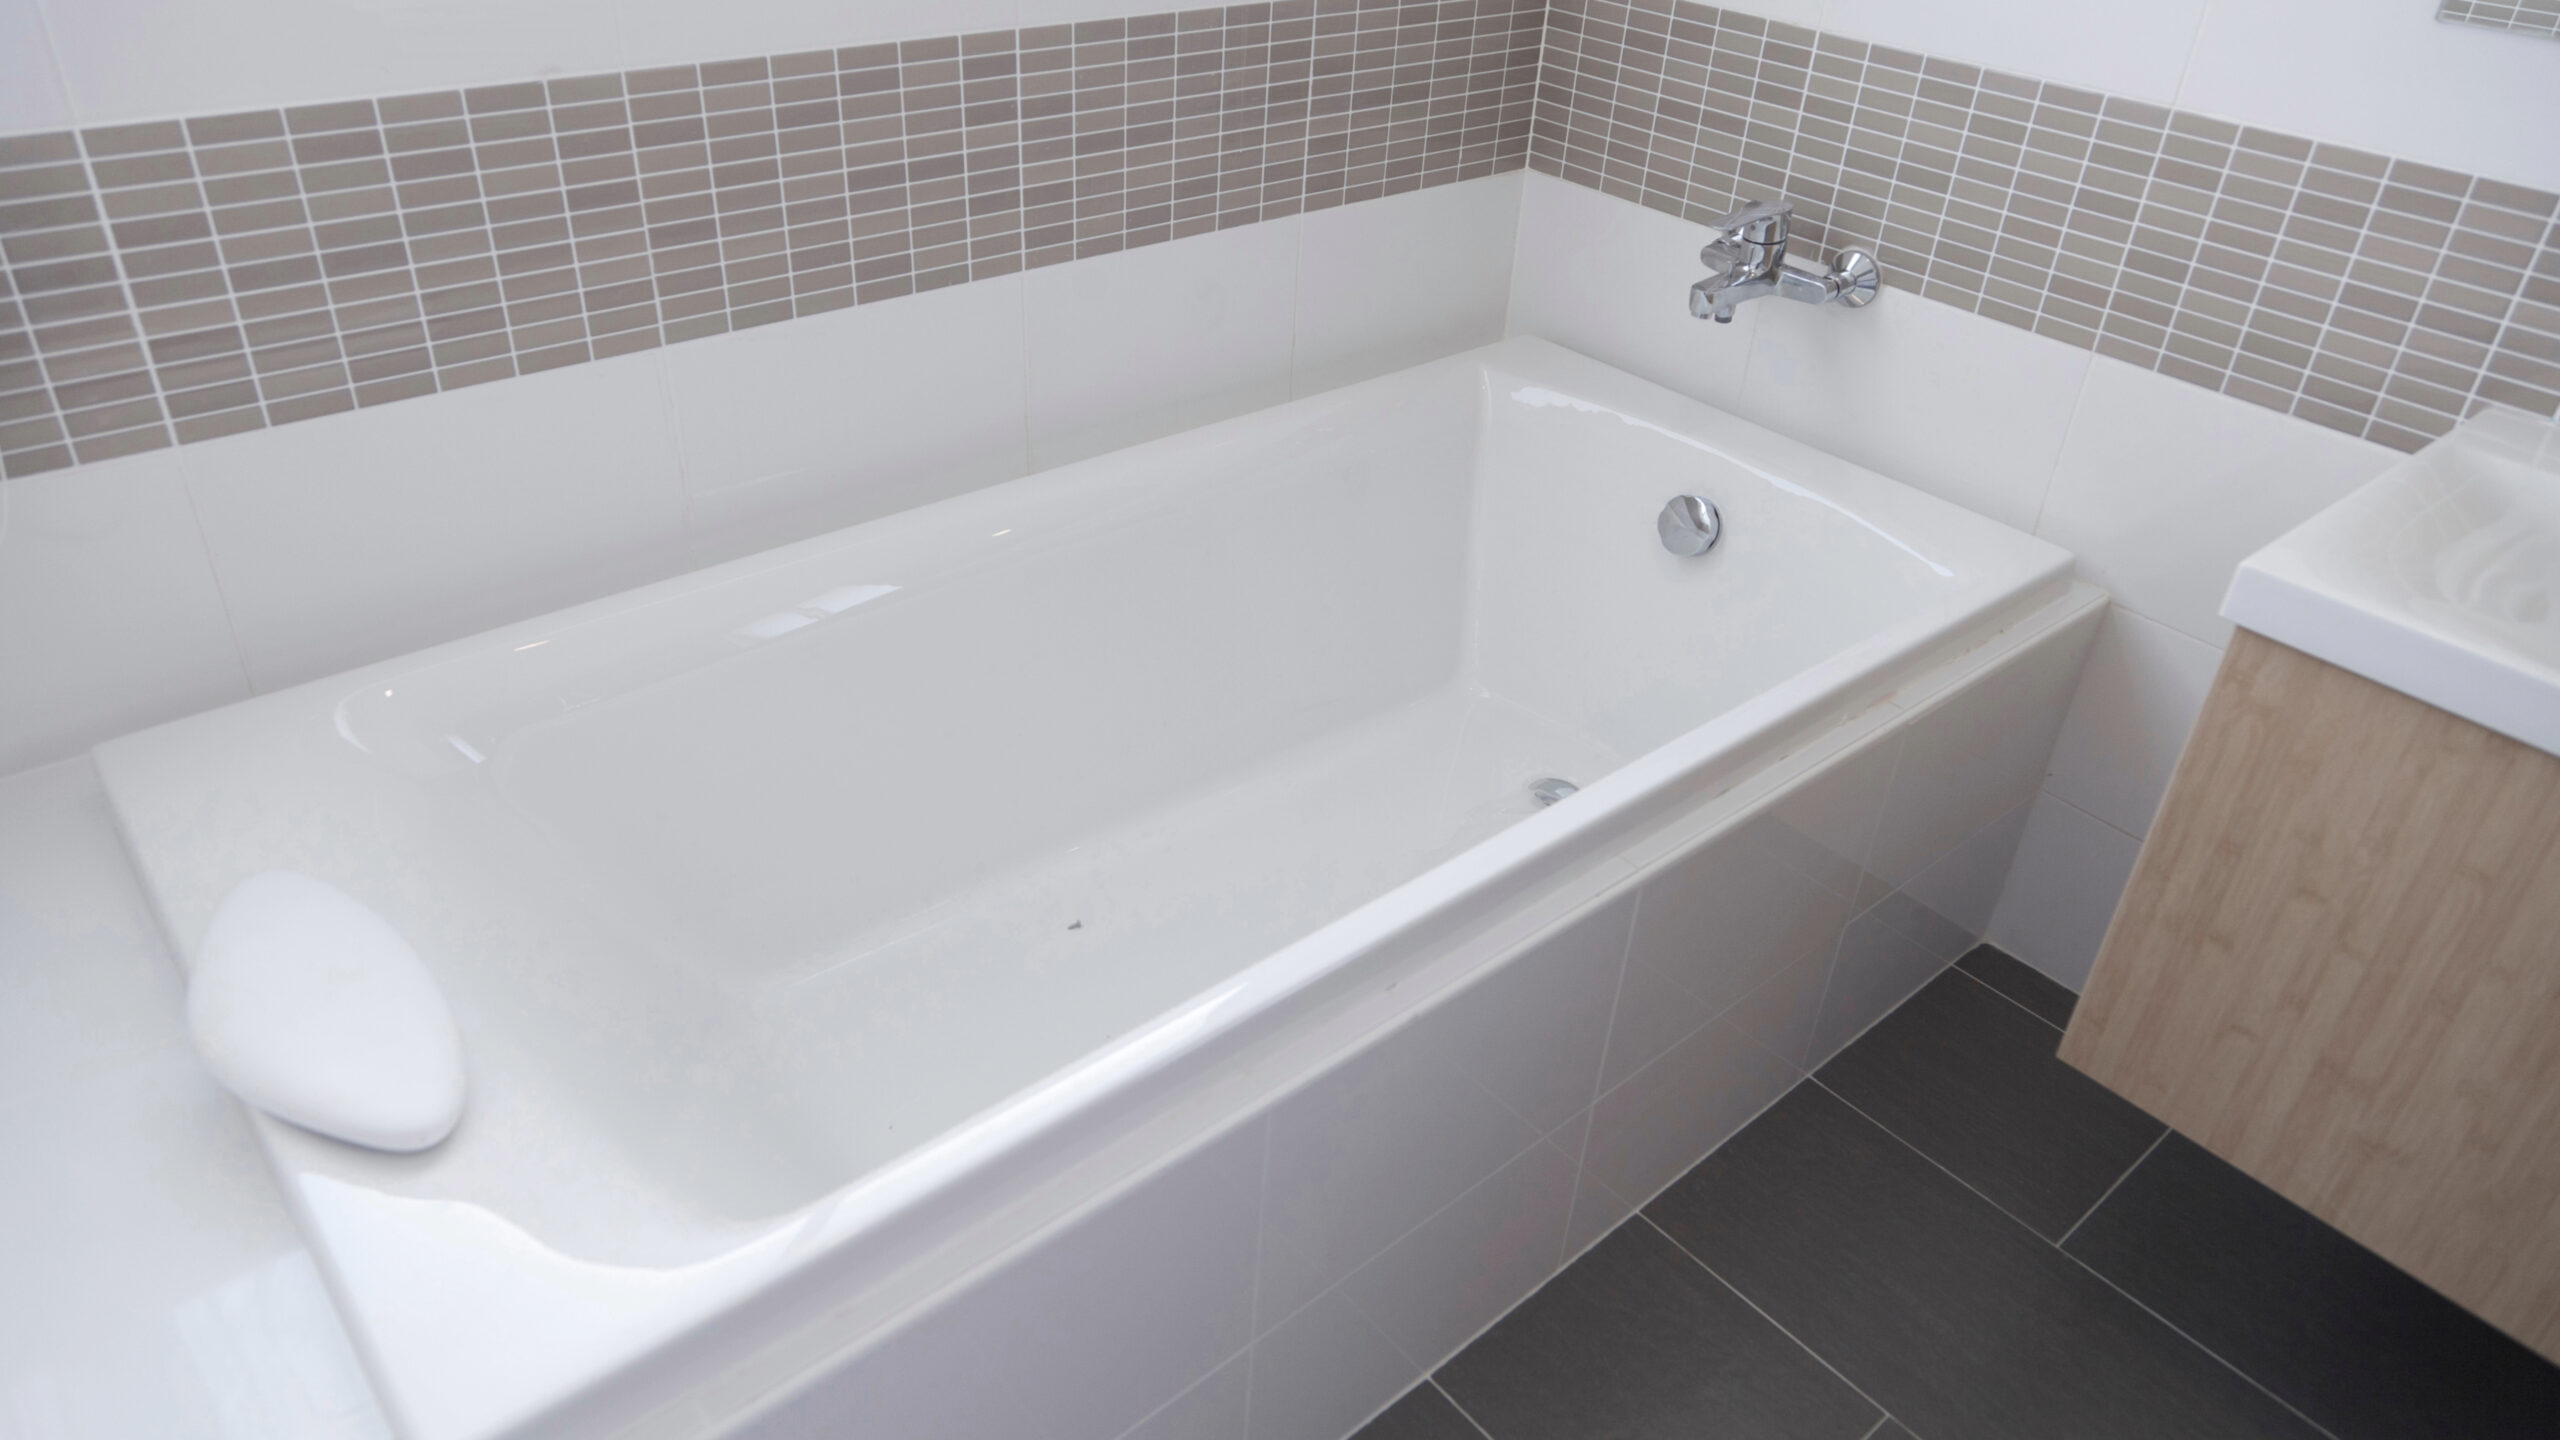 A white bathtub with a tile surround